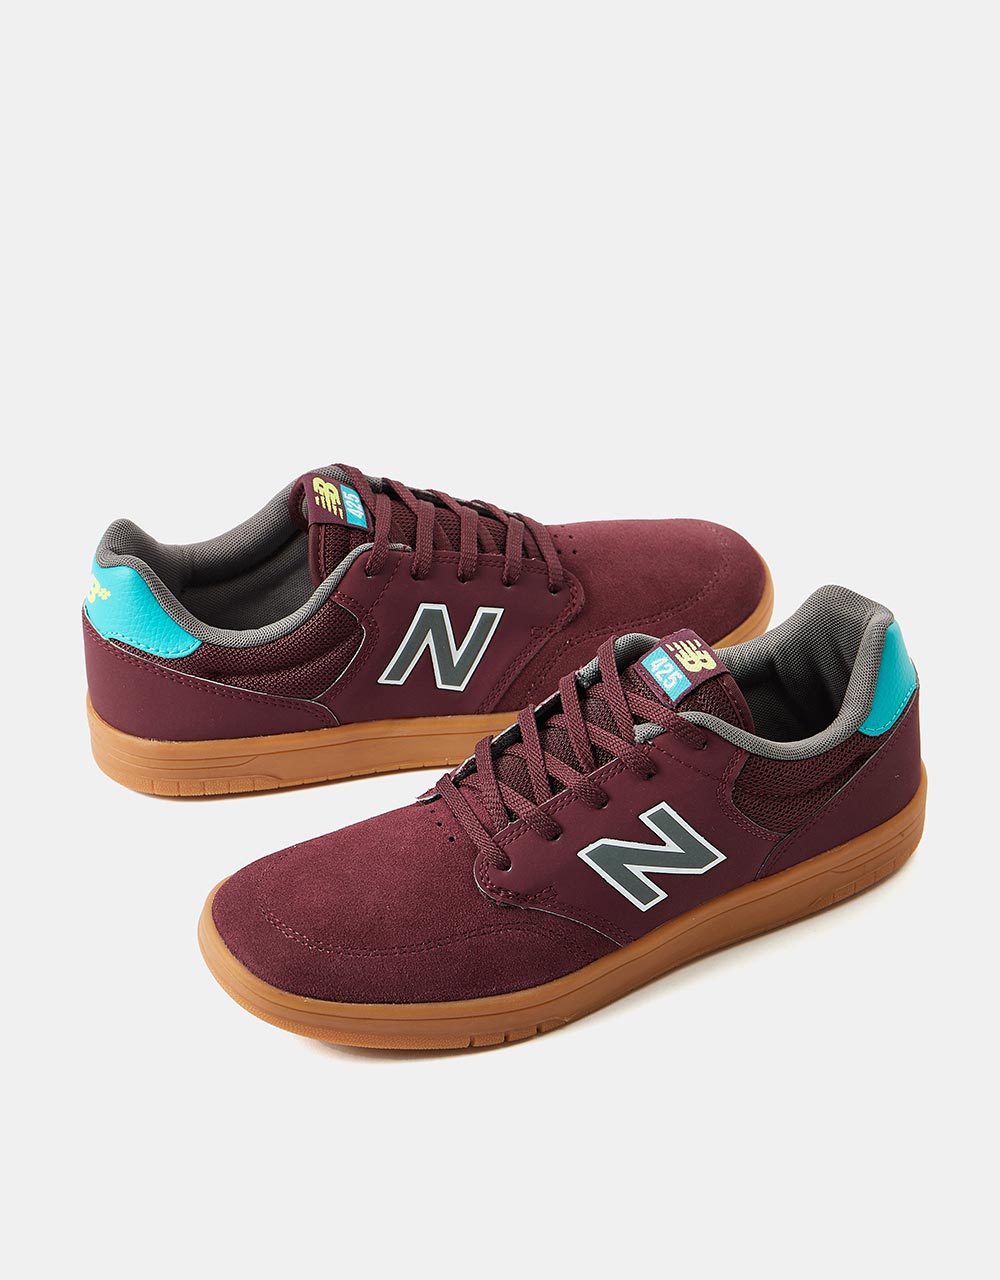 New Balance Numeric 425 Skate Shoes - Burgundy/Gum